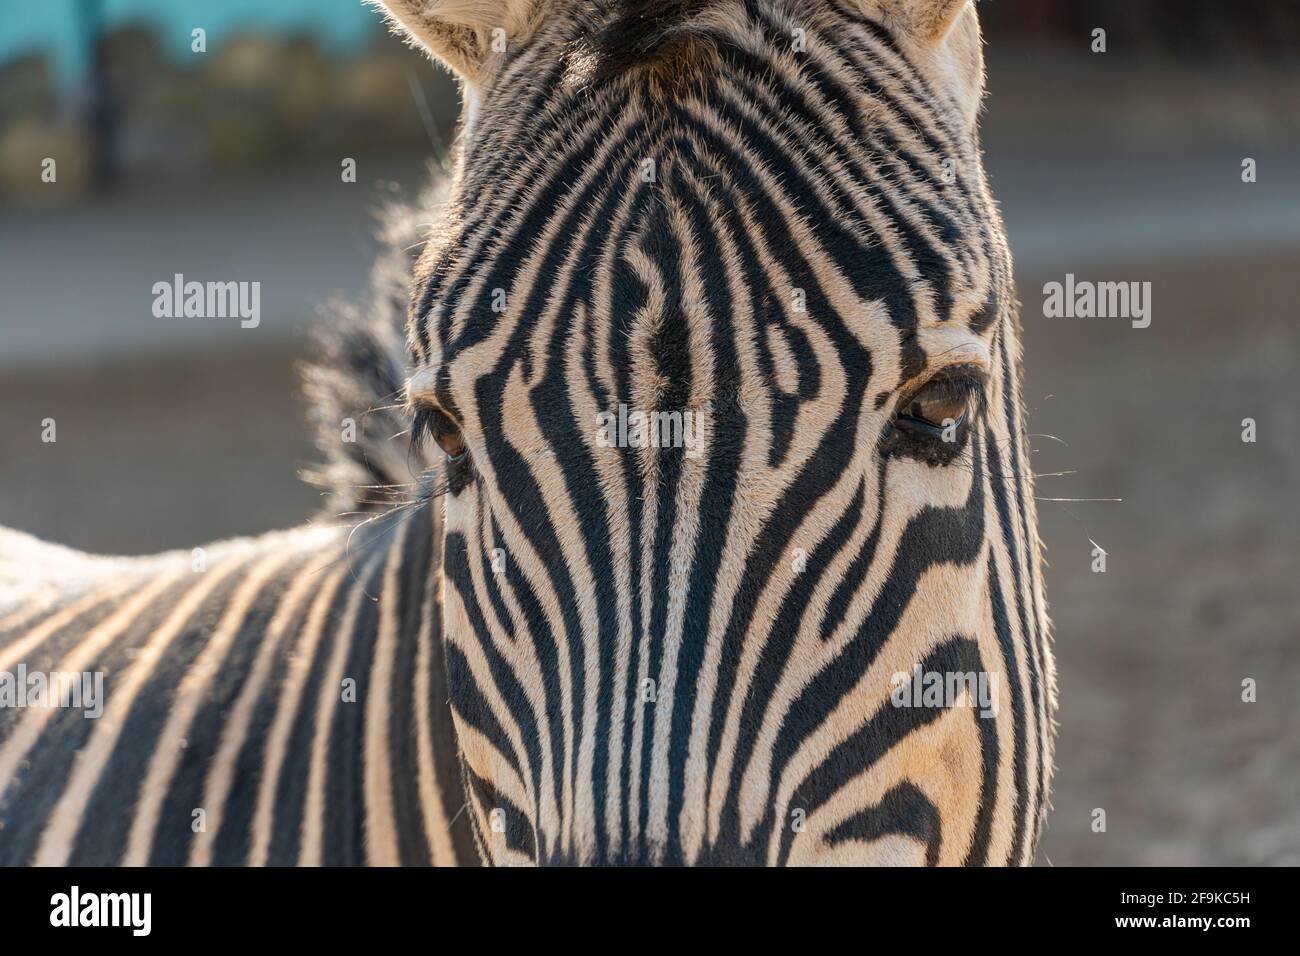 Zebra head close up looking at the camera, hoofed animal striped zebra Stock Photo